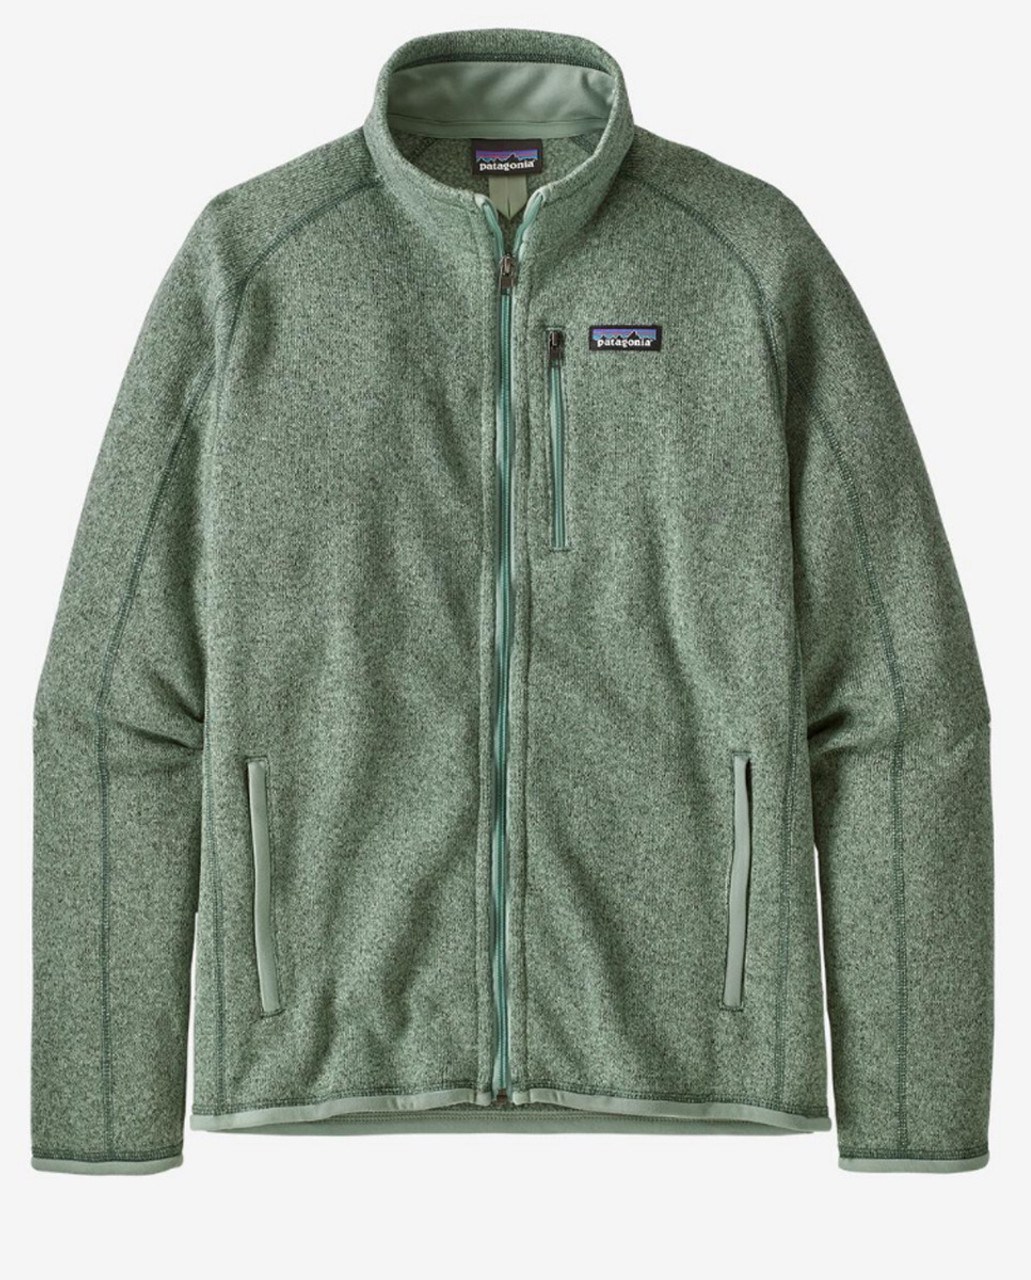 Shop Patagonia Better Sweater Jacket | Bivouac Ann Arbor